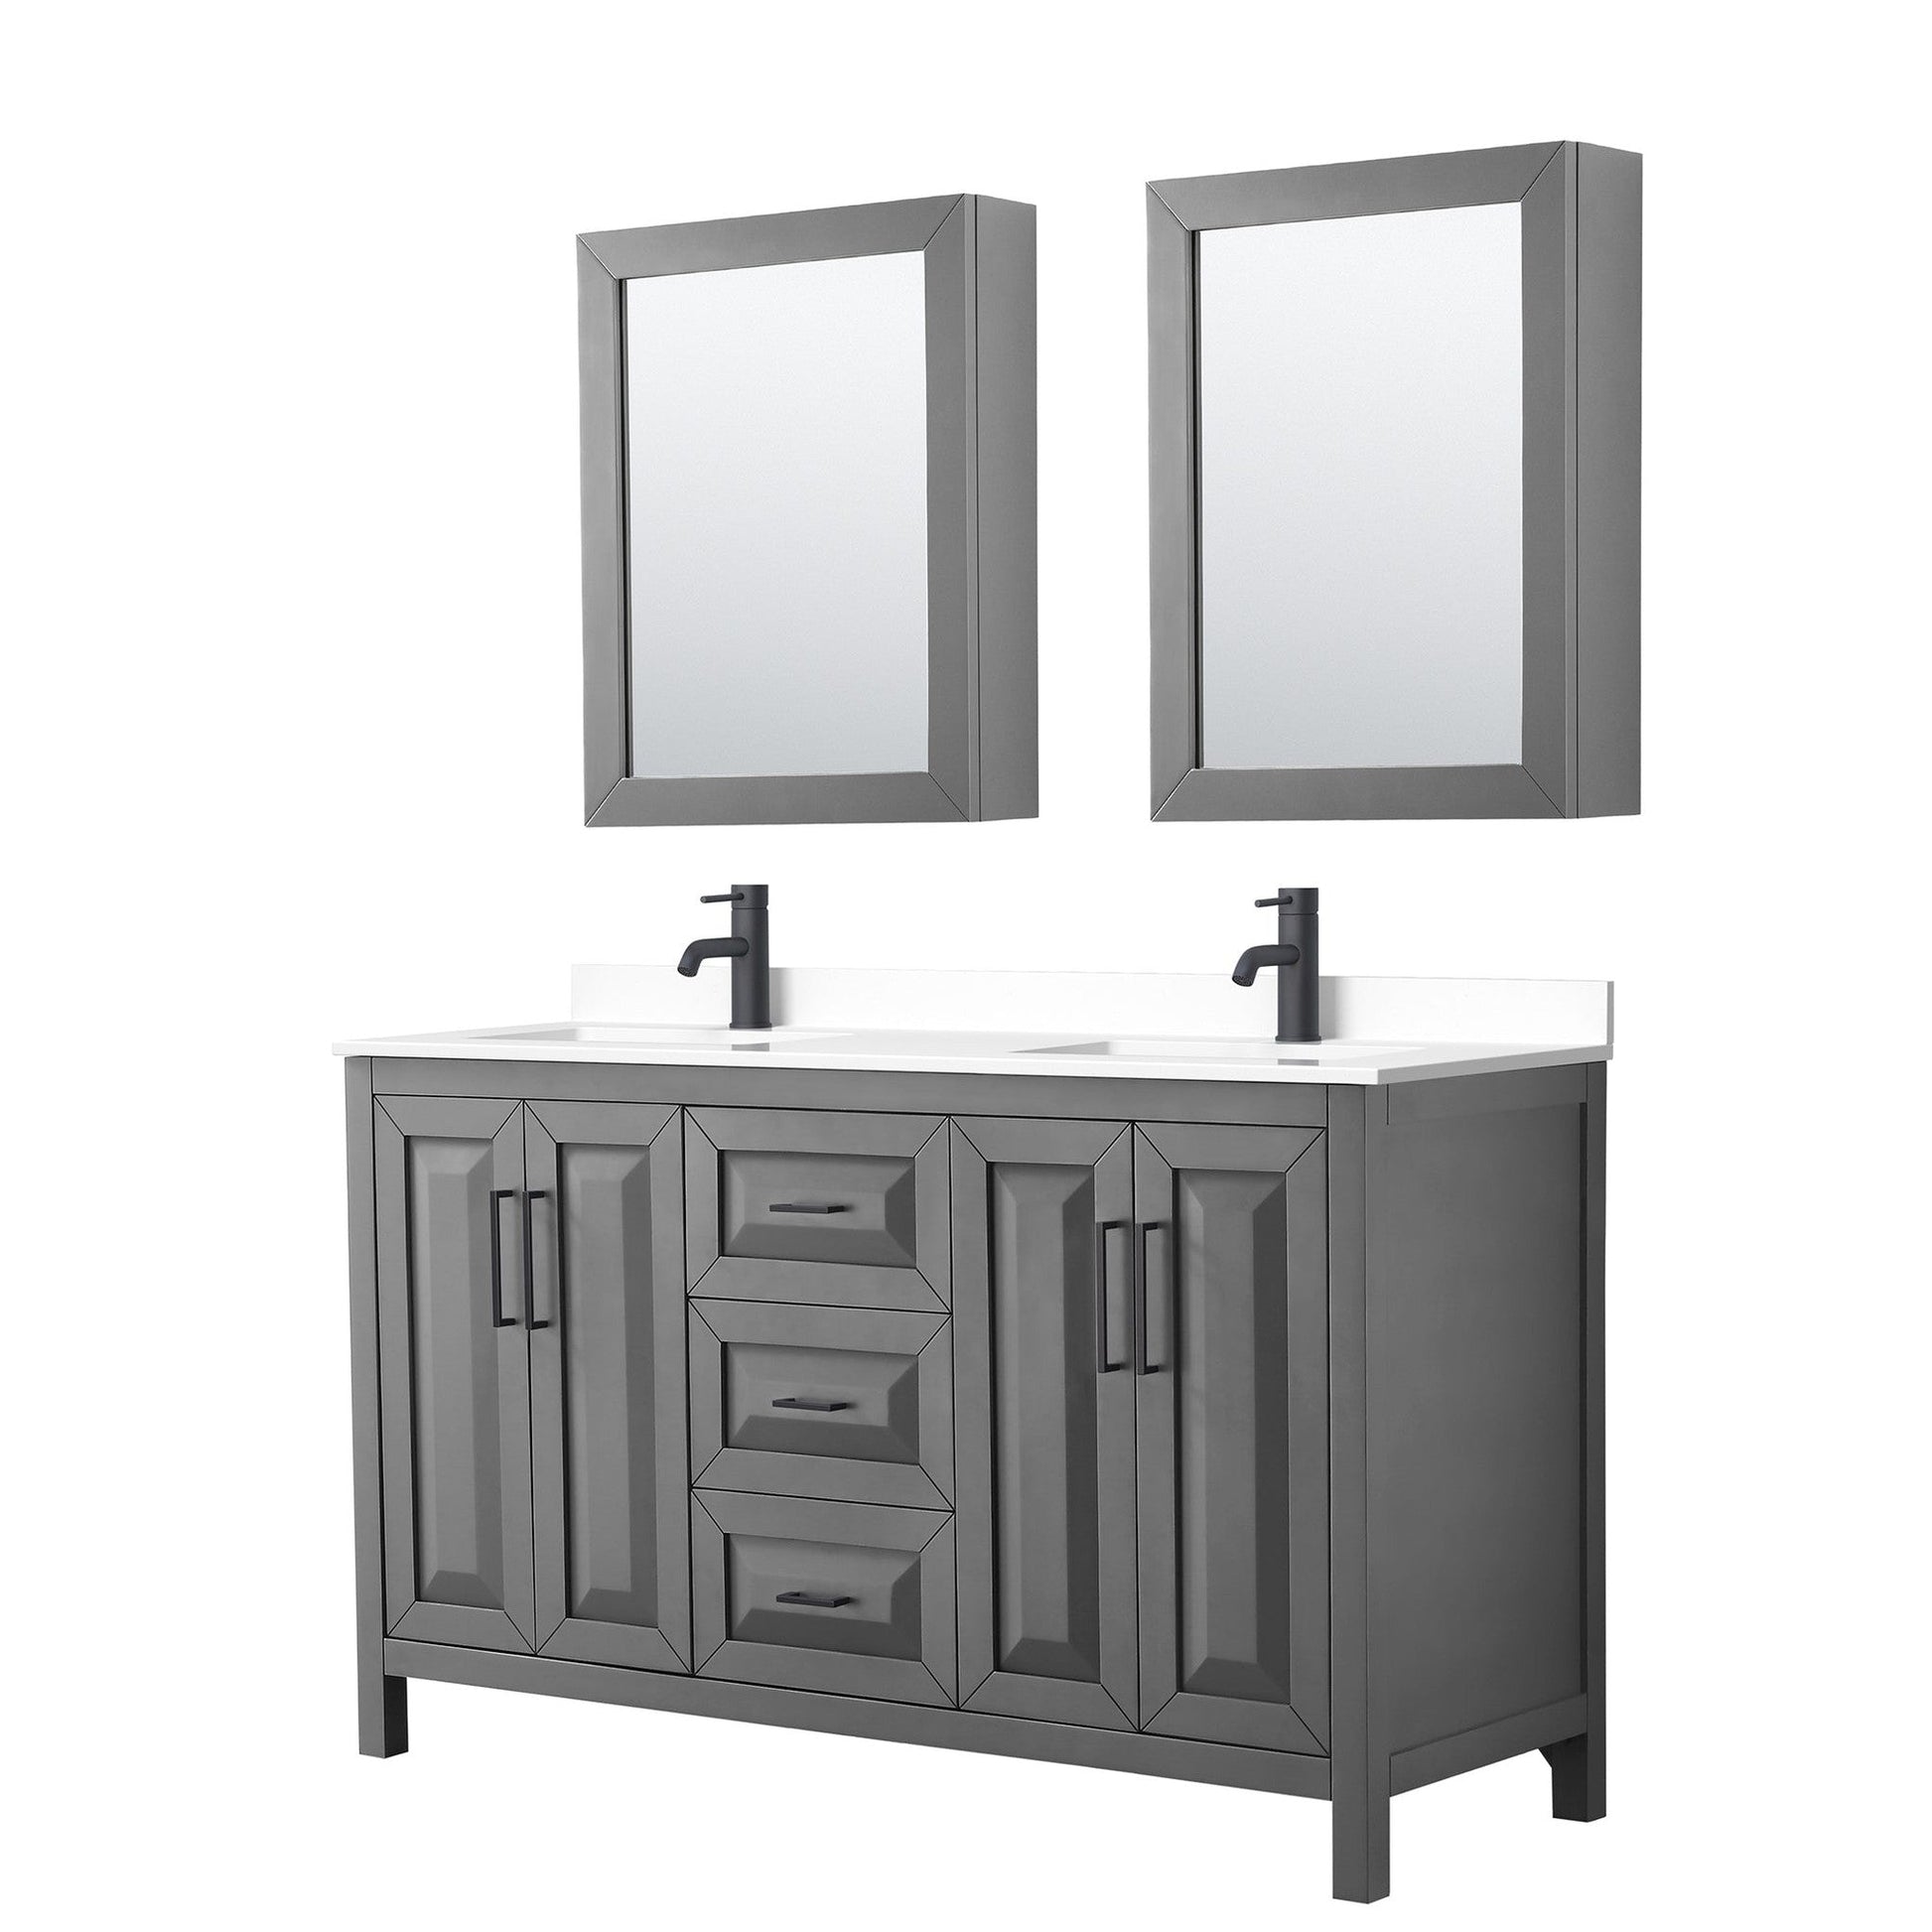 Daria 60" Double Bathroom Vanity in Dark Gray, White Cultured Marble Countertop, Undermount Square Sinks, Matte Black Trim, Medicine Cabinets